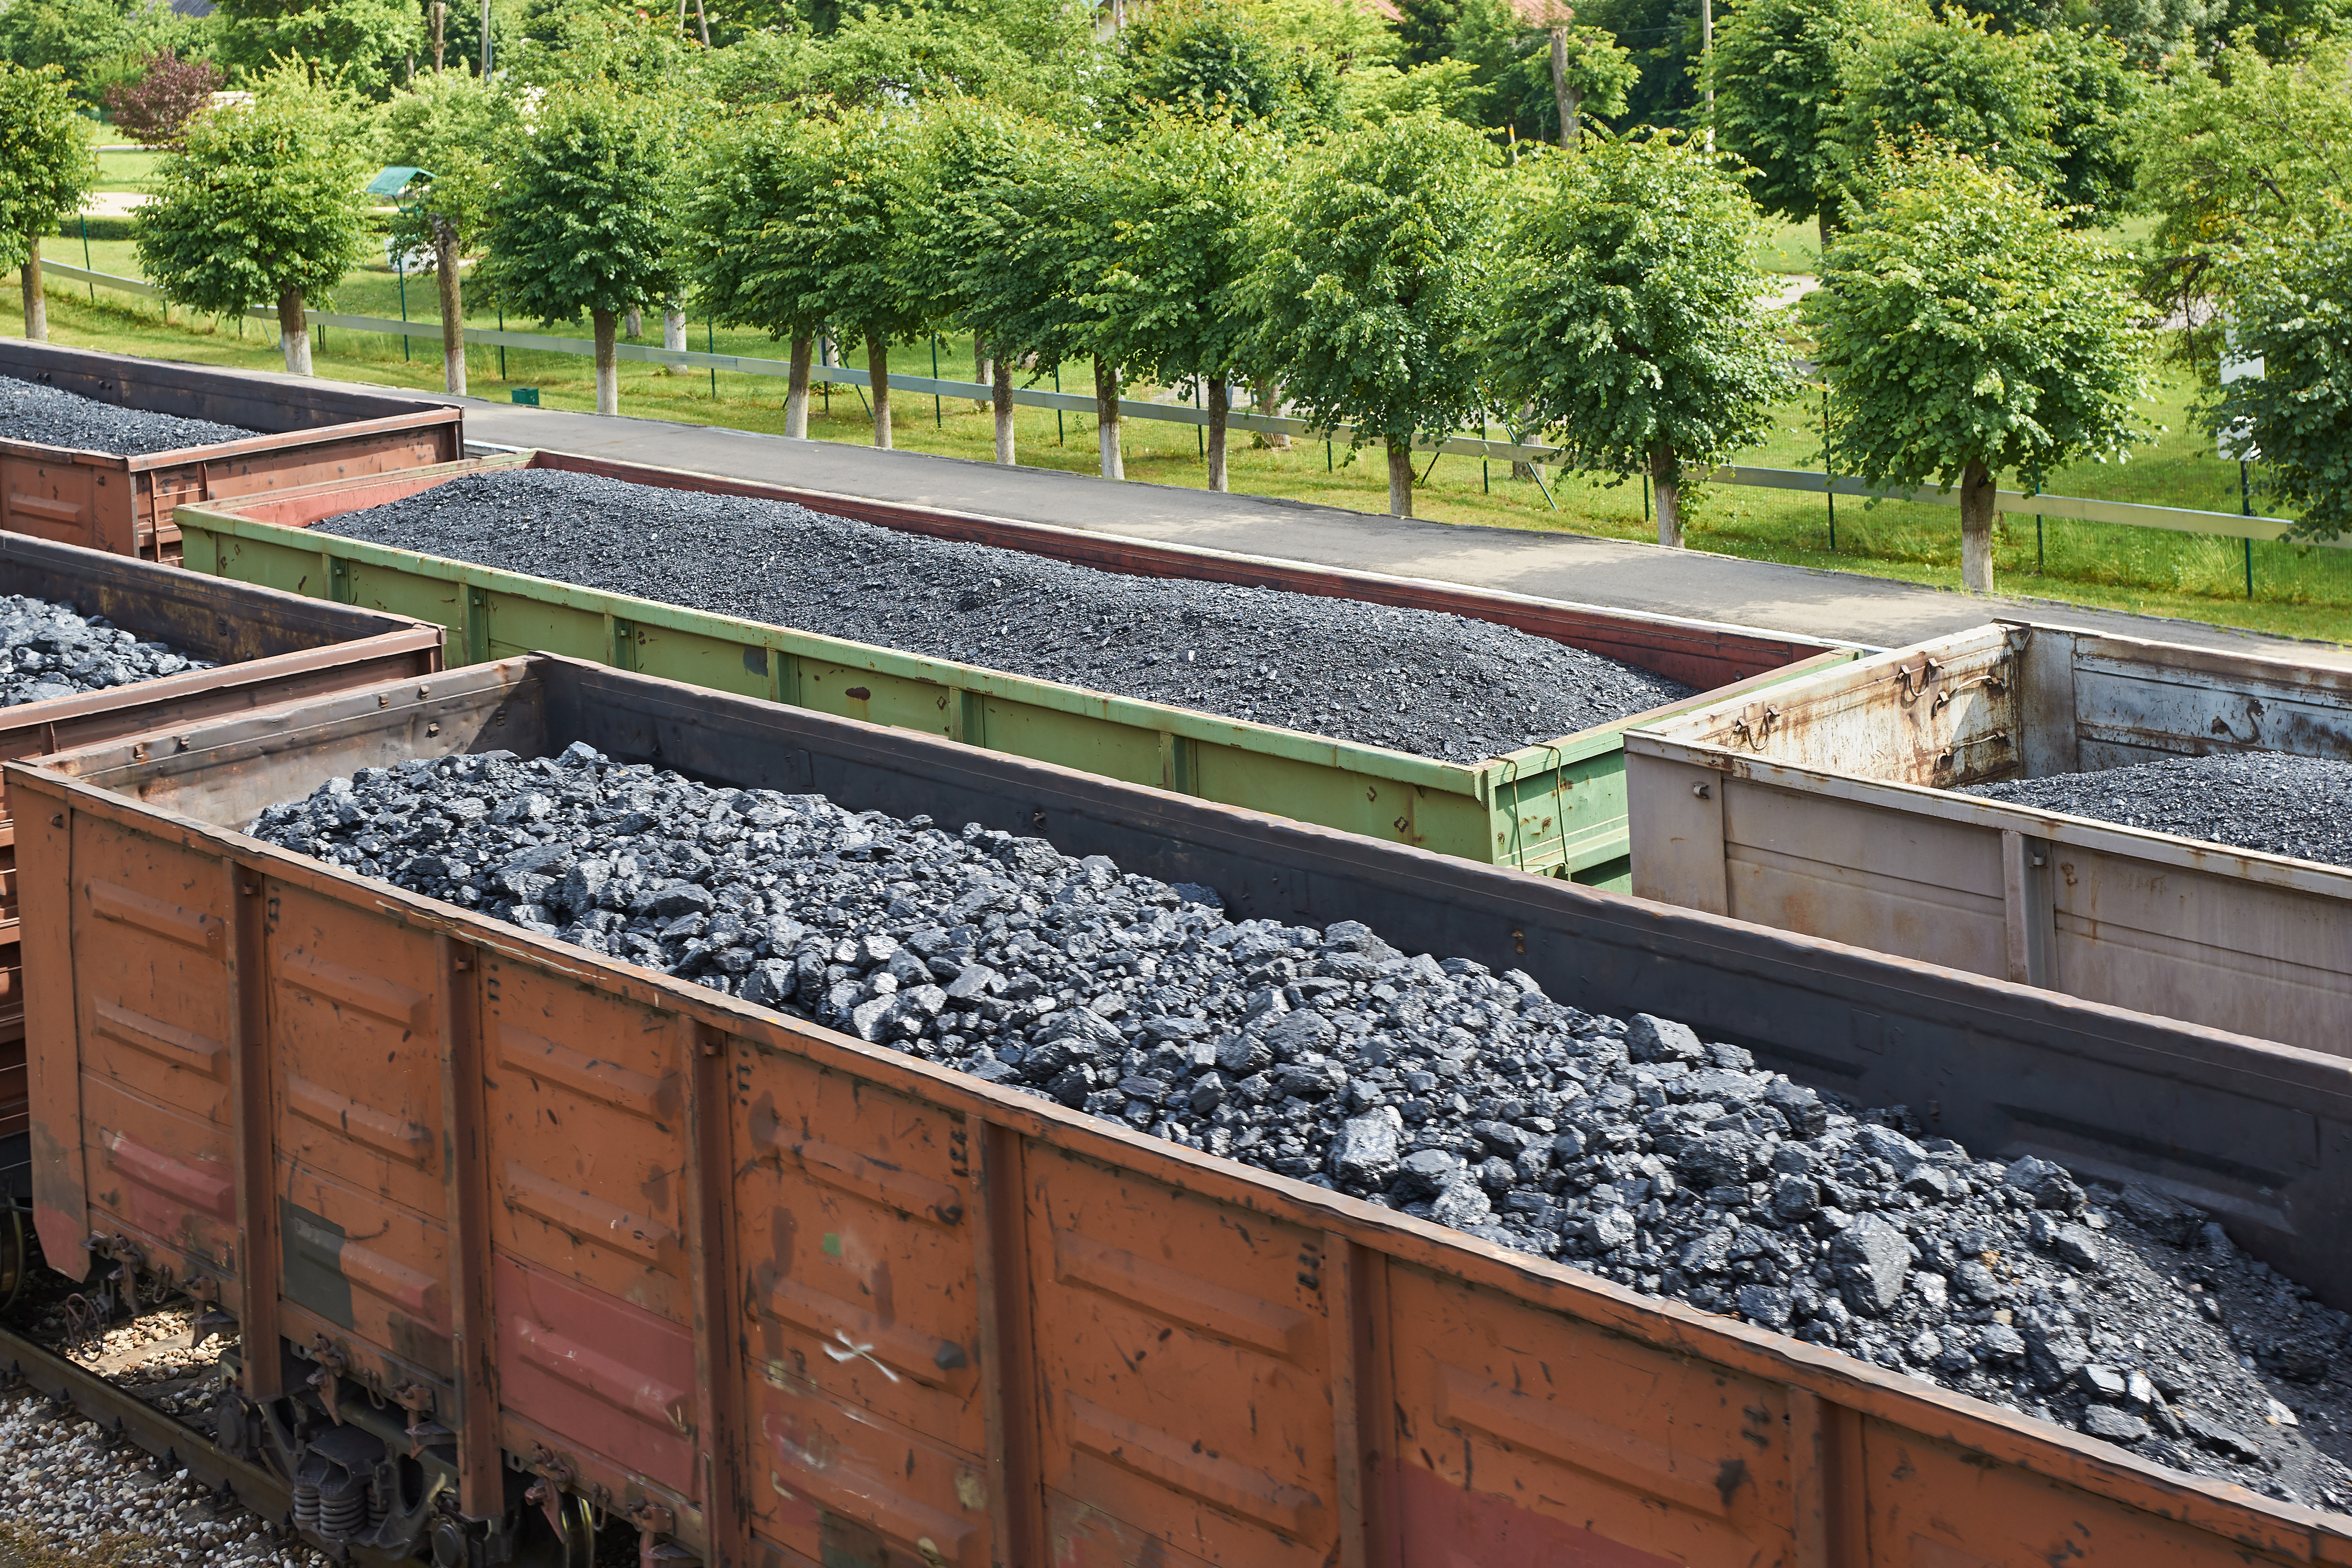 Coal freight trains